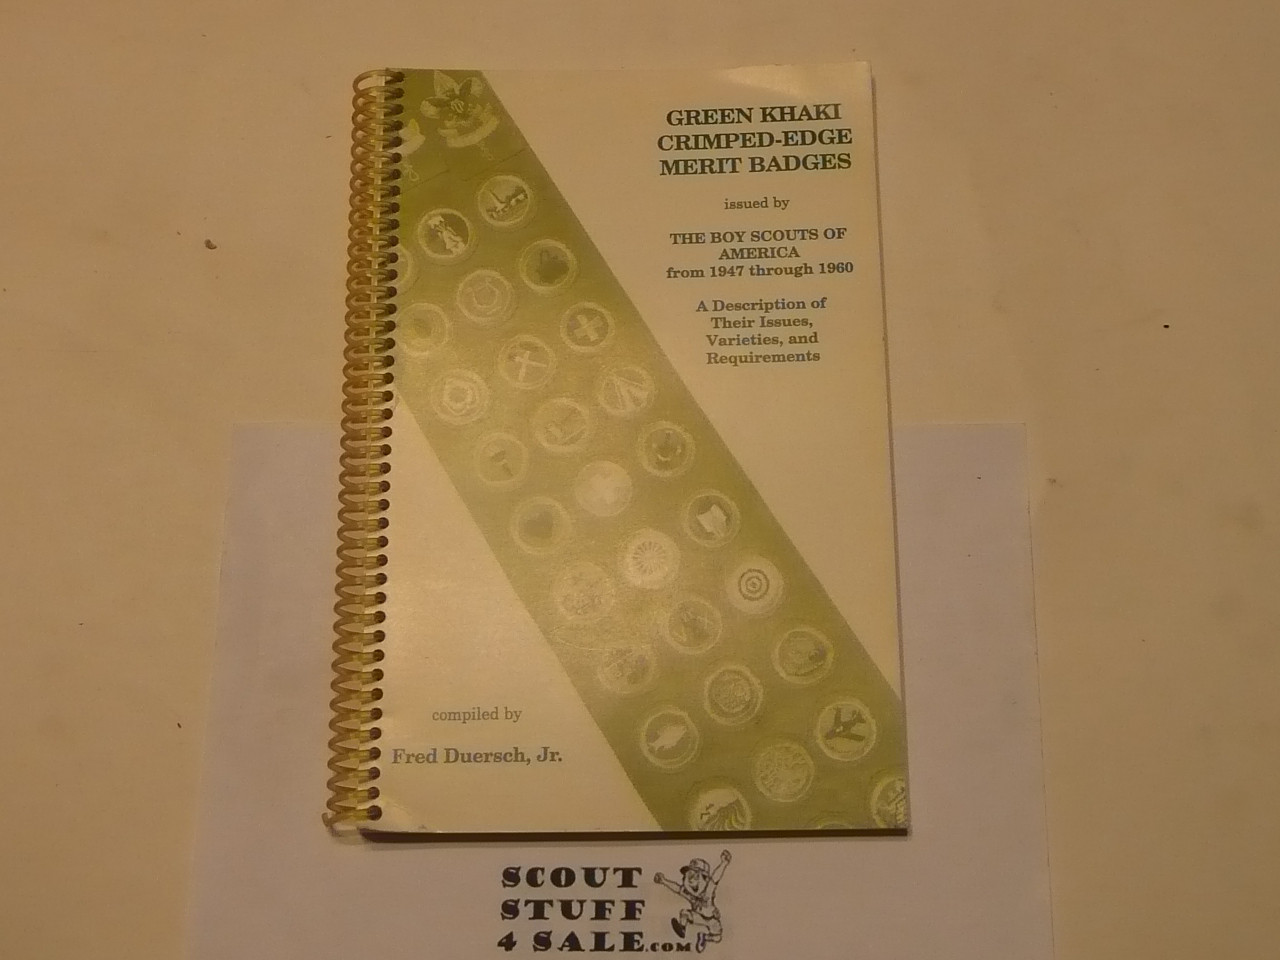 Green Khaki Crimped Merit Badges, by Fred Duersch Jr., 1993 Printing